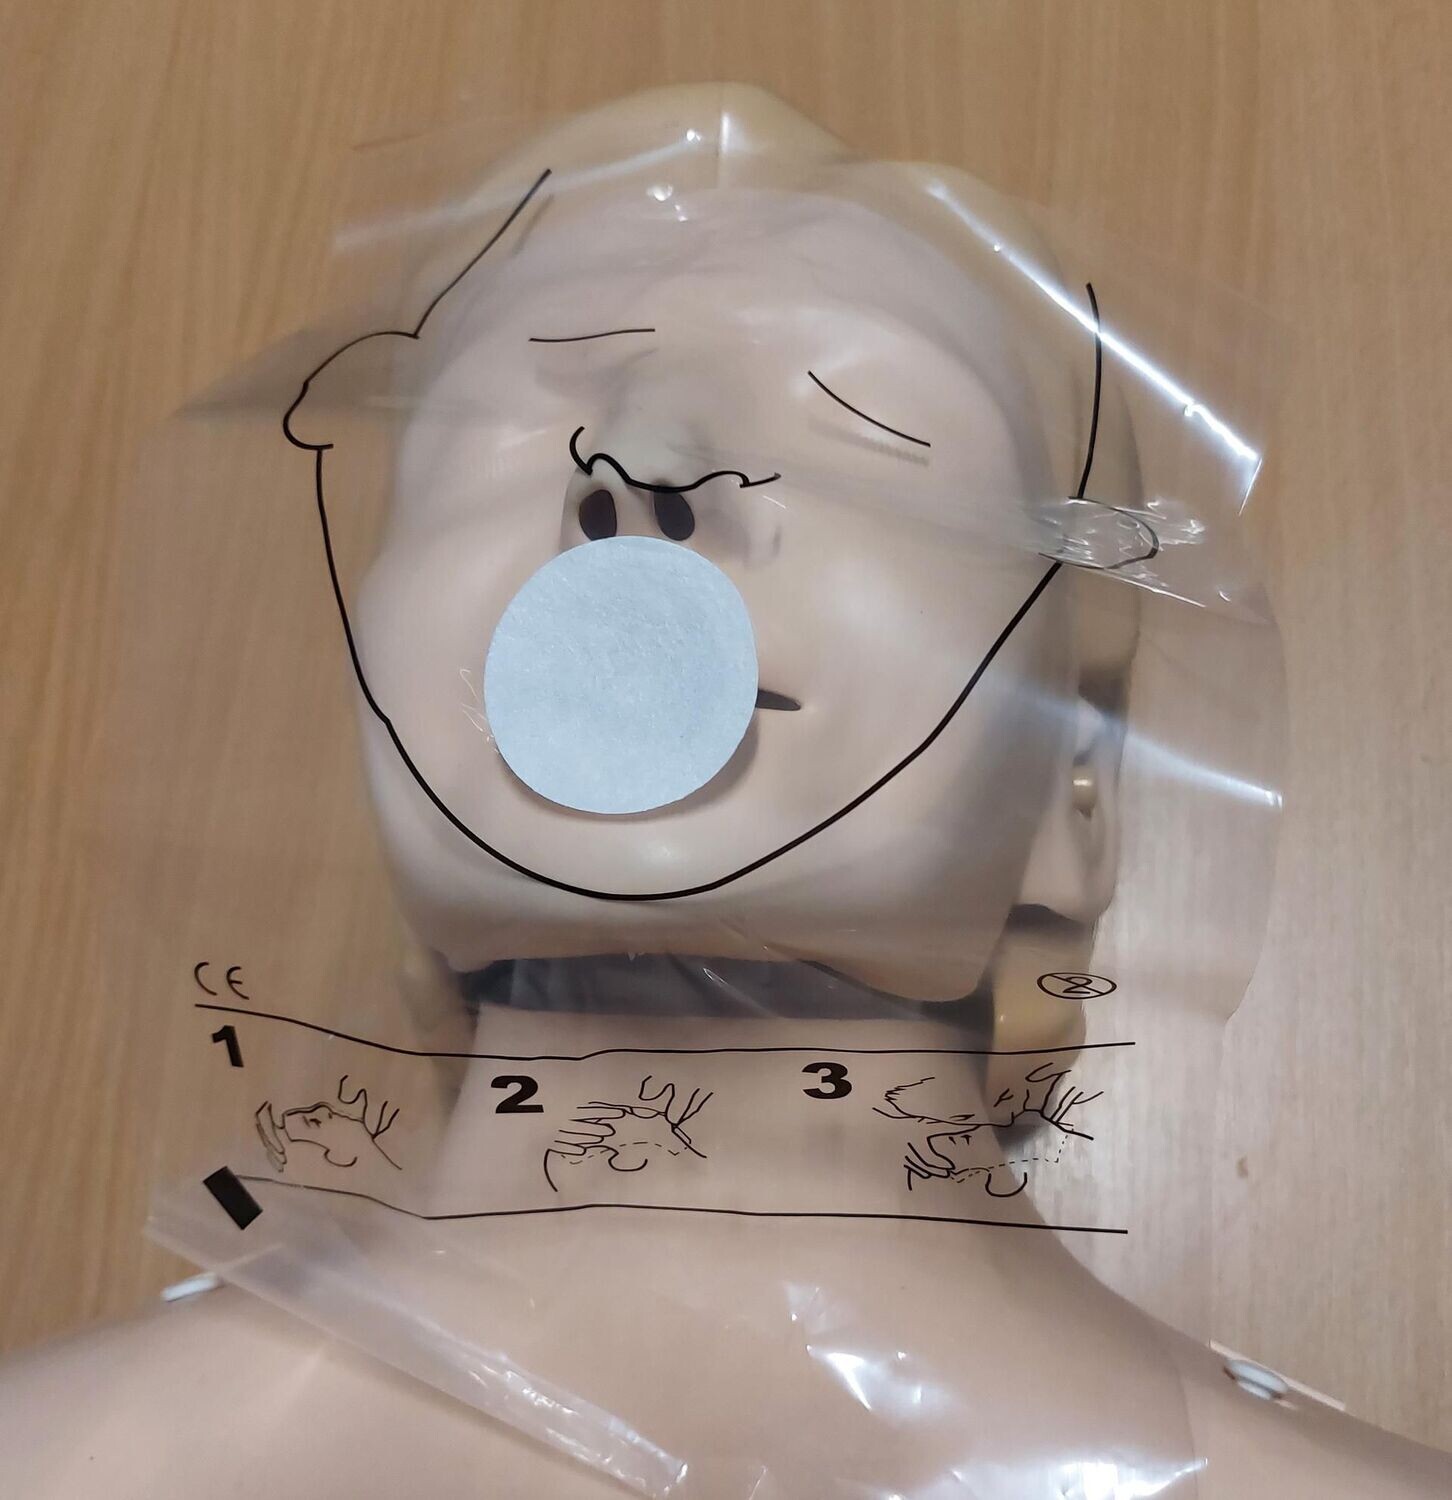 50 Training Manikin Resuscitation Face Shields On A Roll